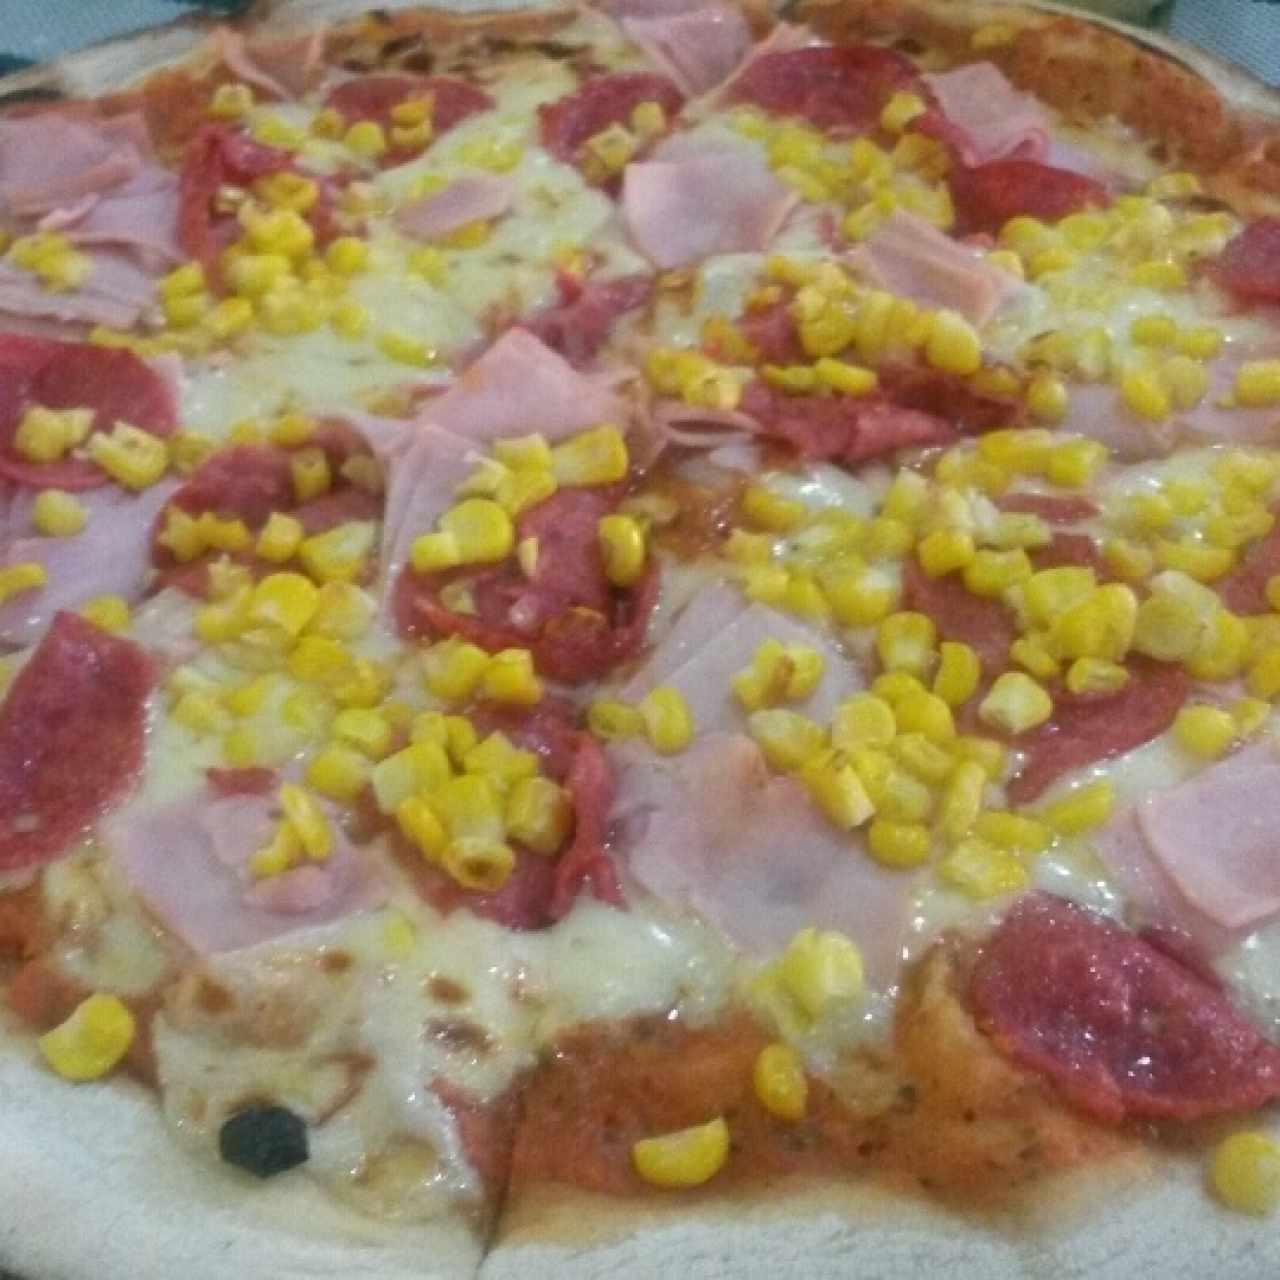 Pizza Romana 